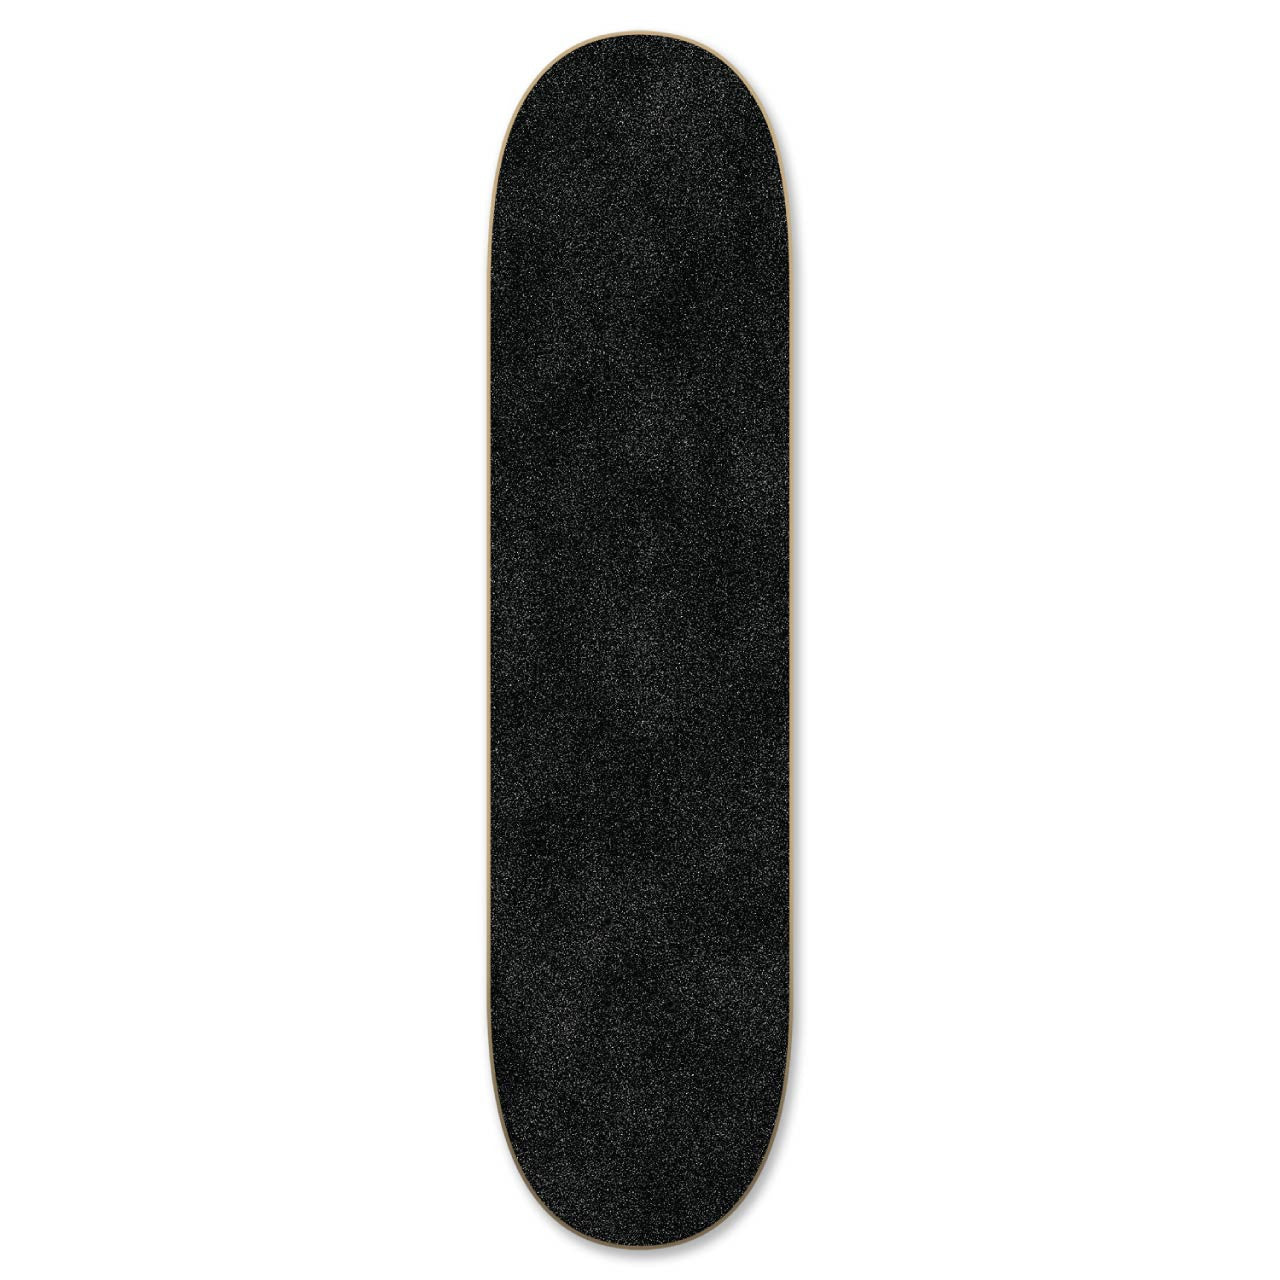 Graphic Skateboard Deck - Comix Series - Bandit